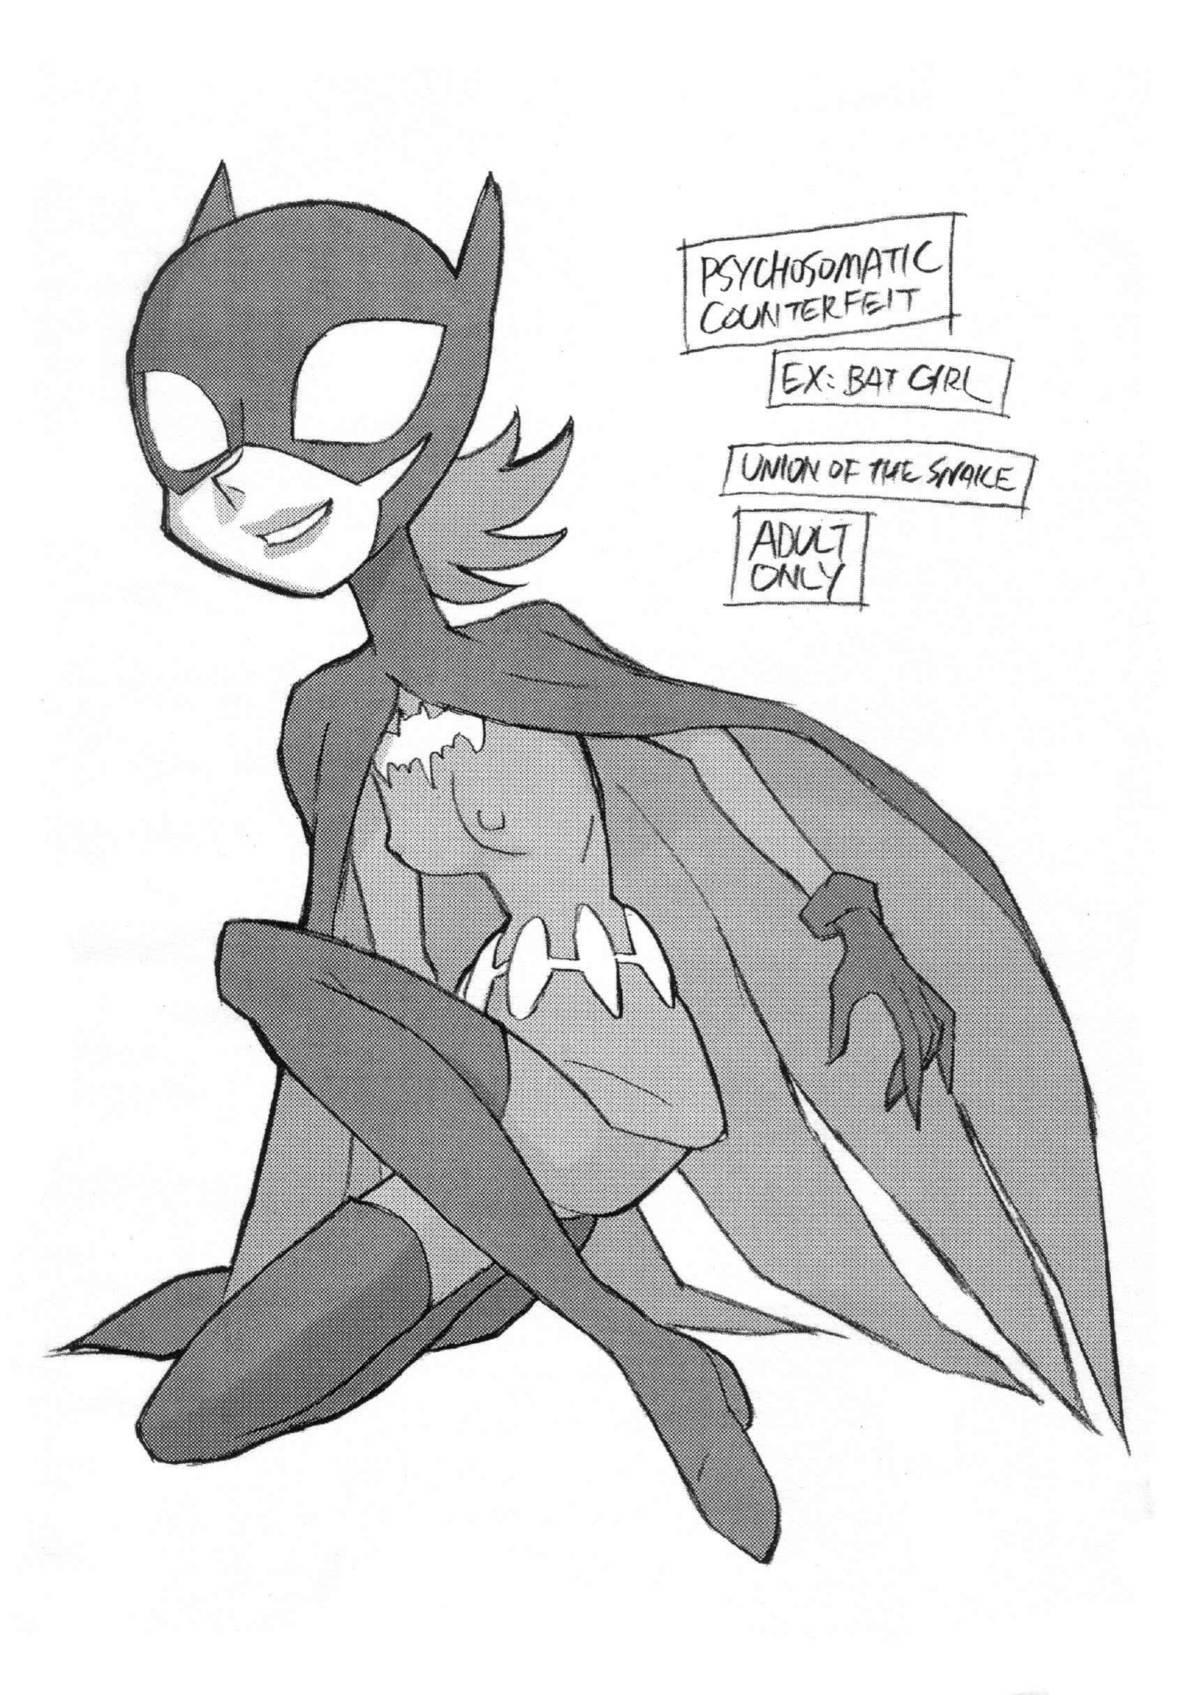 Psychosomatic Counterfeit Ex: Batgirl 0